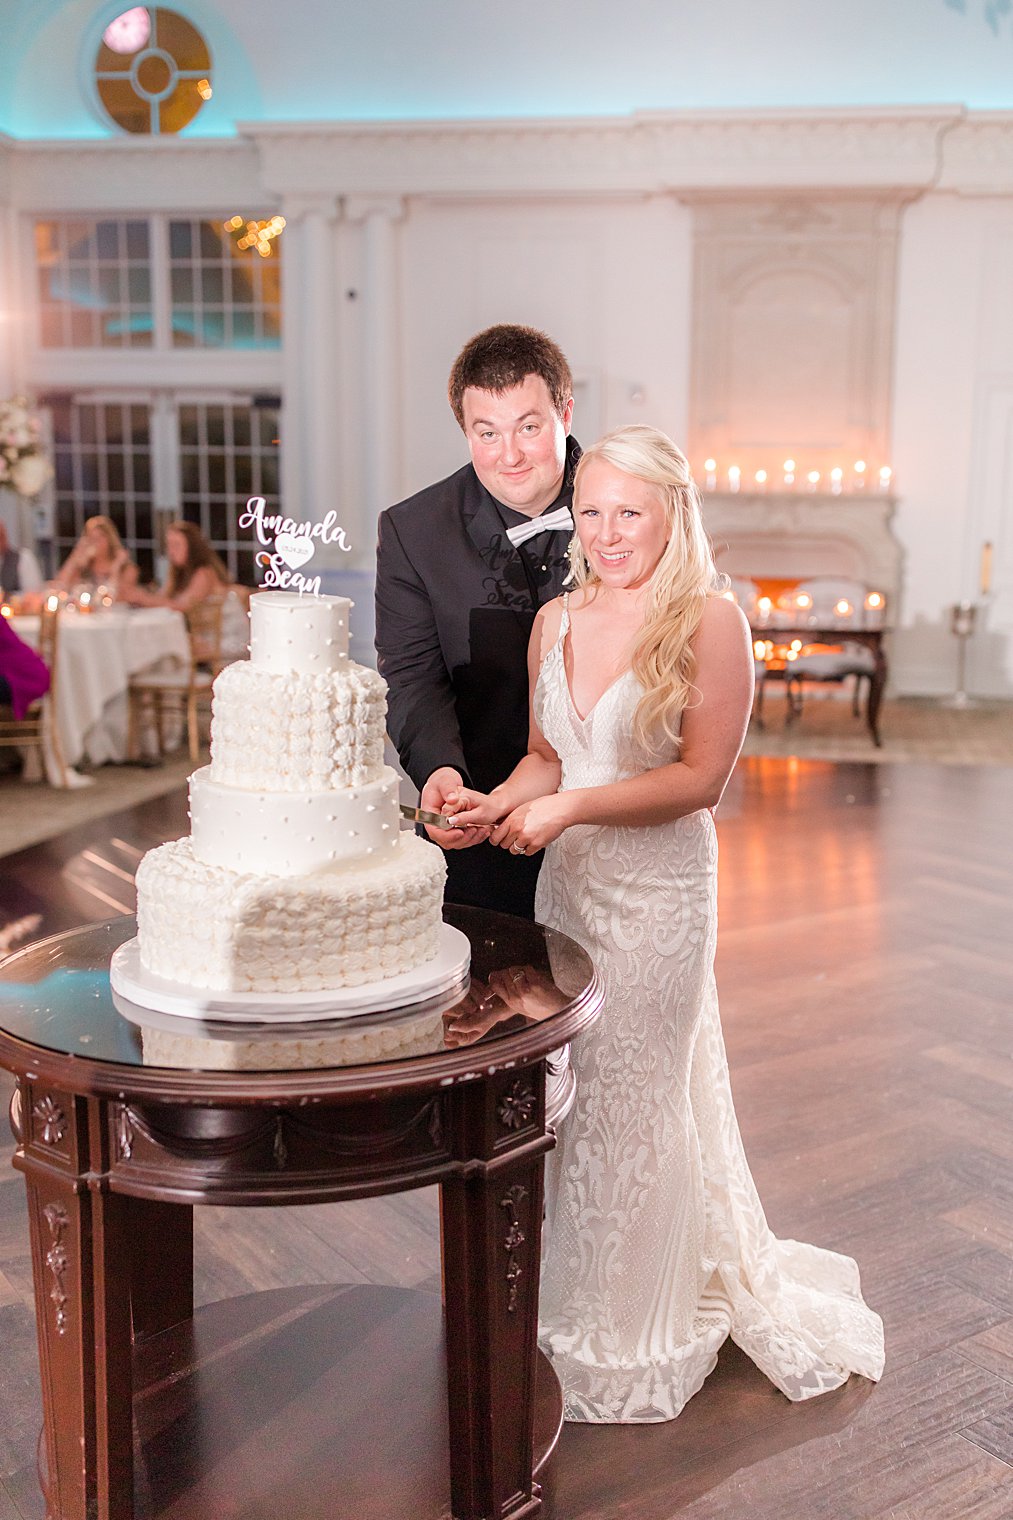 newlyweds cut wedding cake in New Jersey ballroom